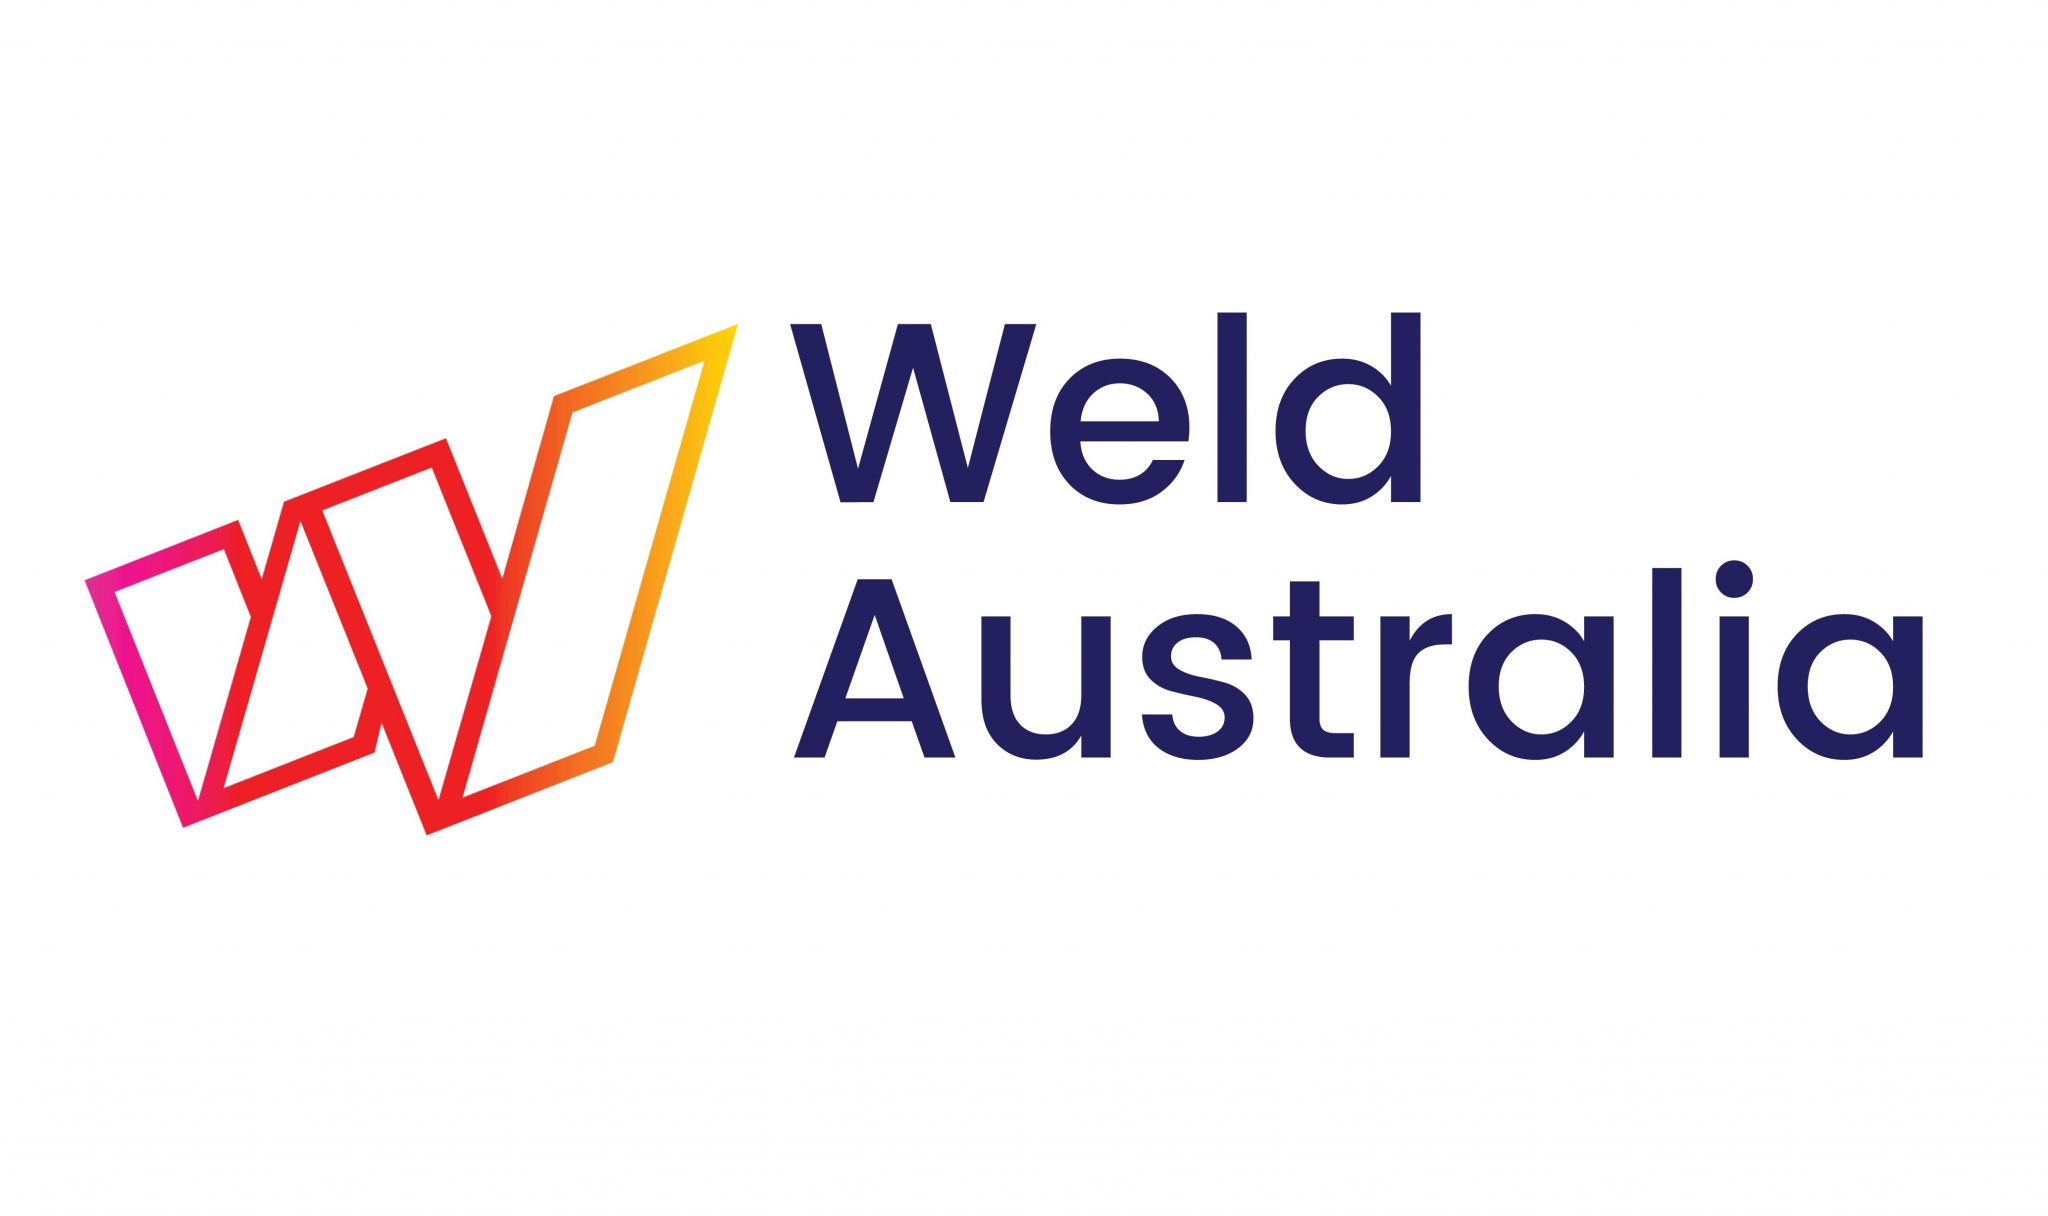 Weld Australia